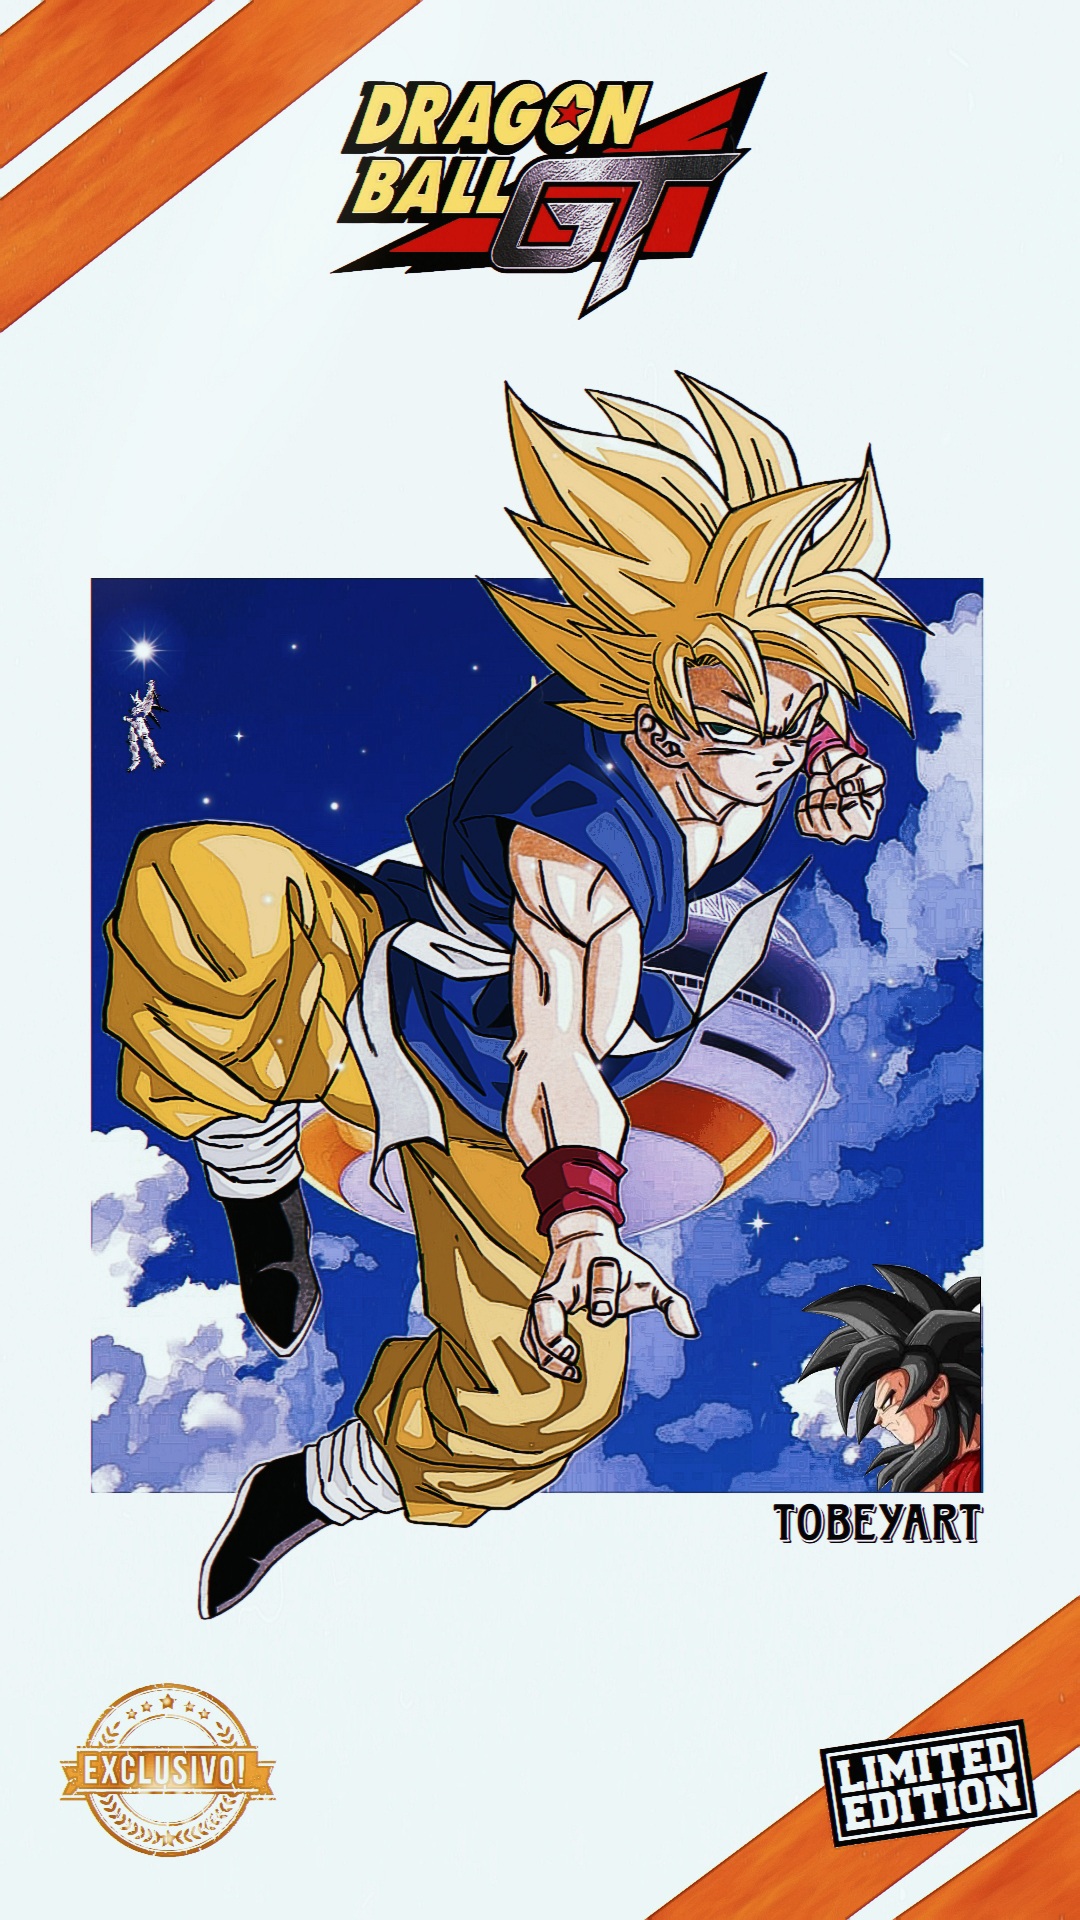 Goku Depth Effect Wallpaper by FryQuest on DeviantArt